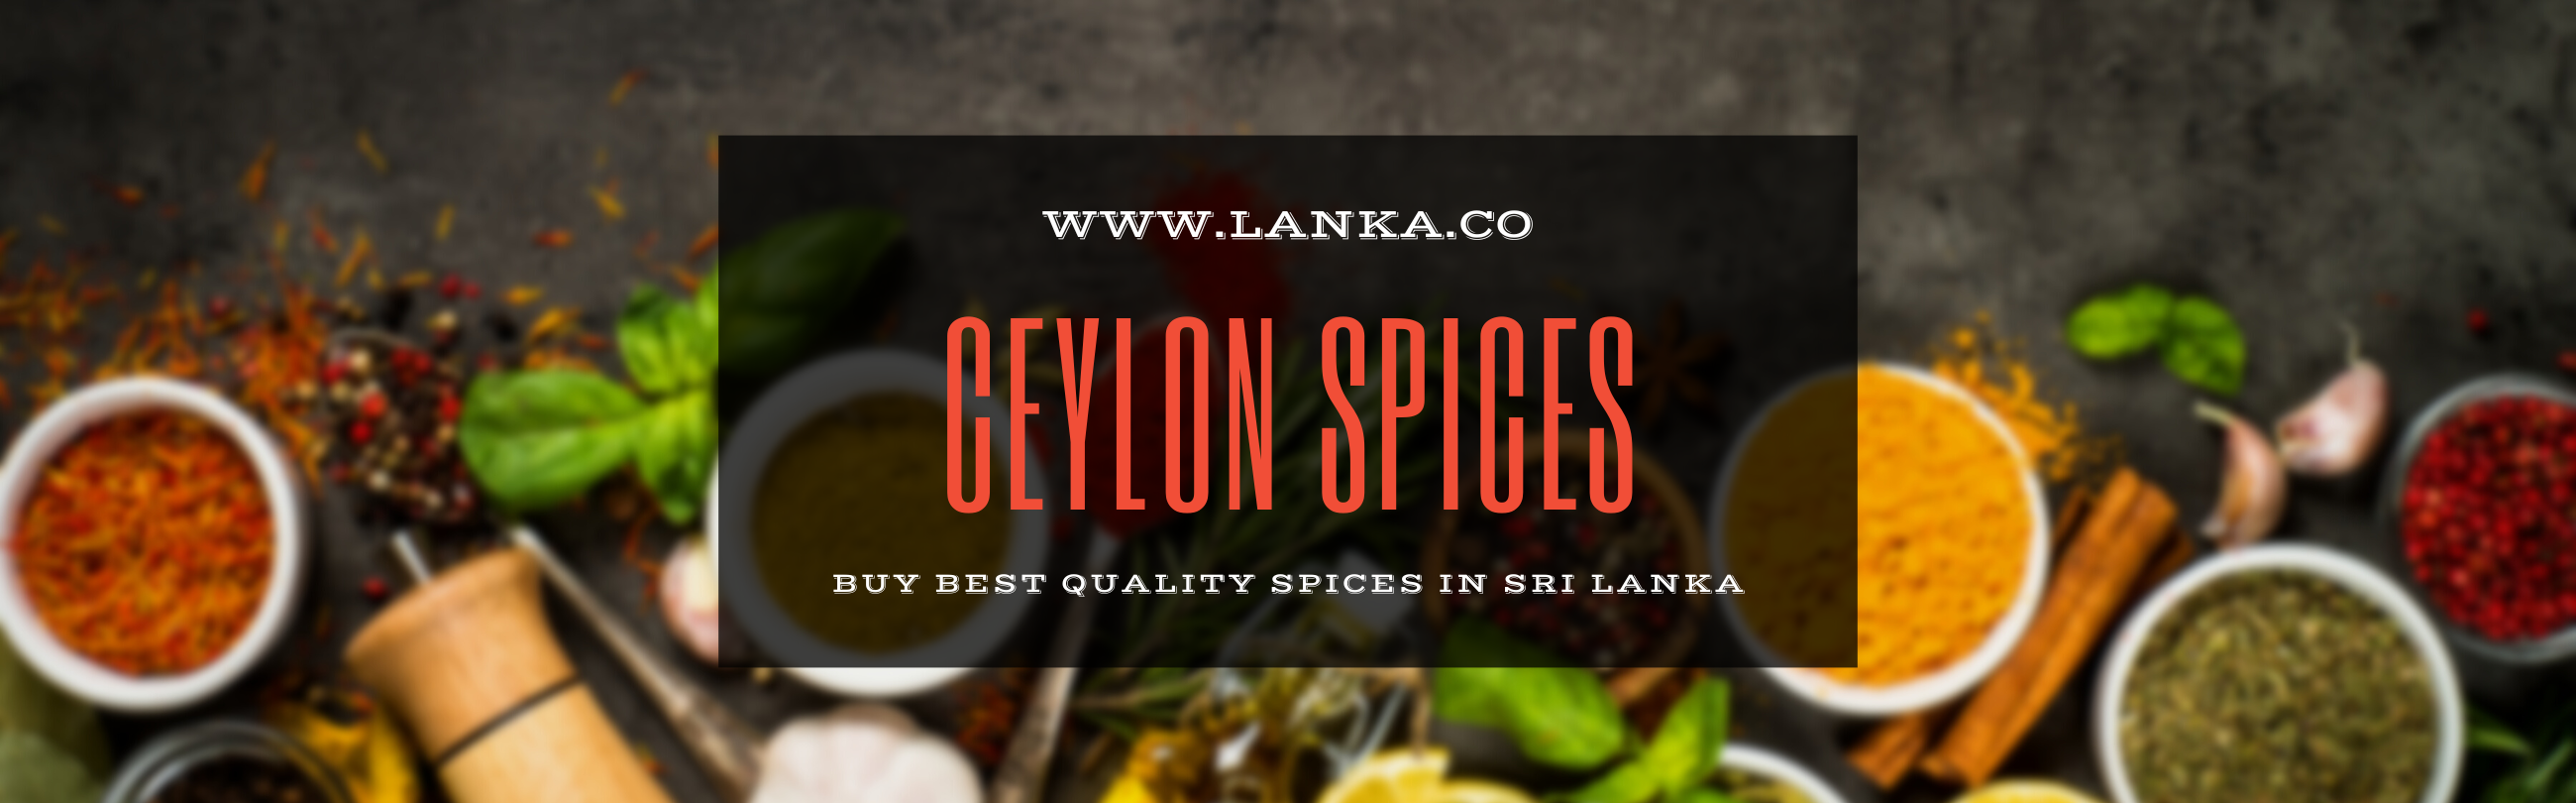 ceylon spices